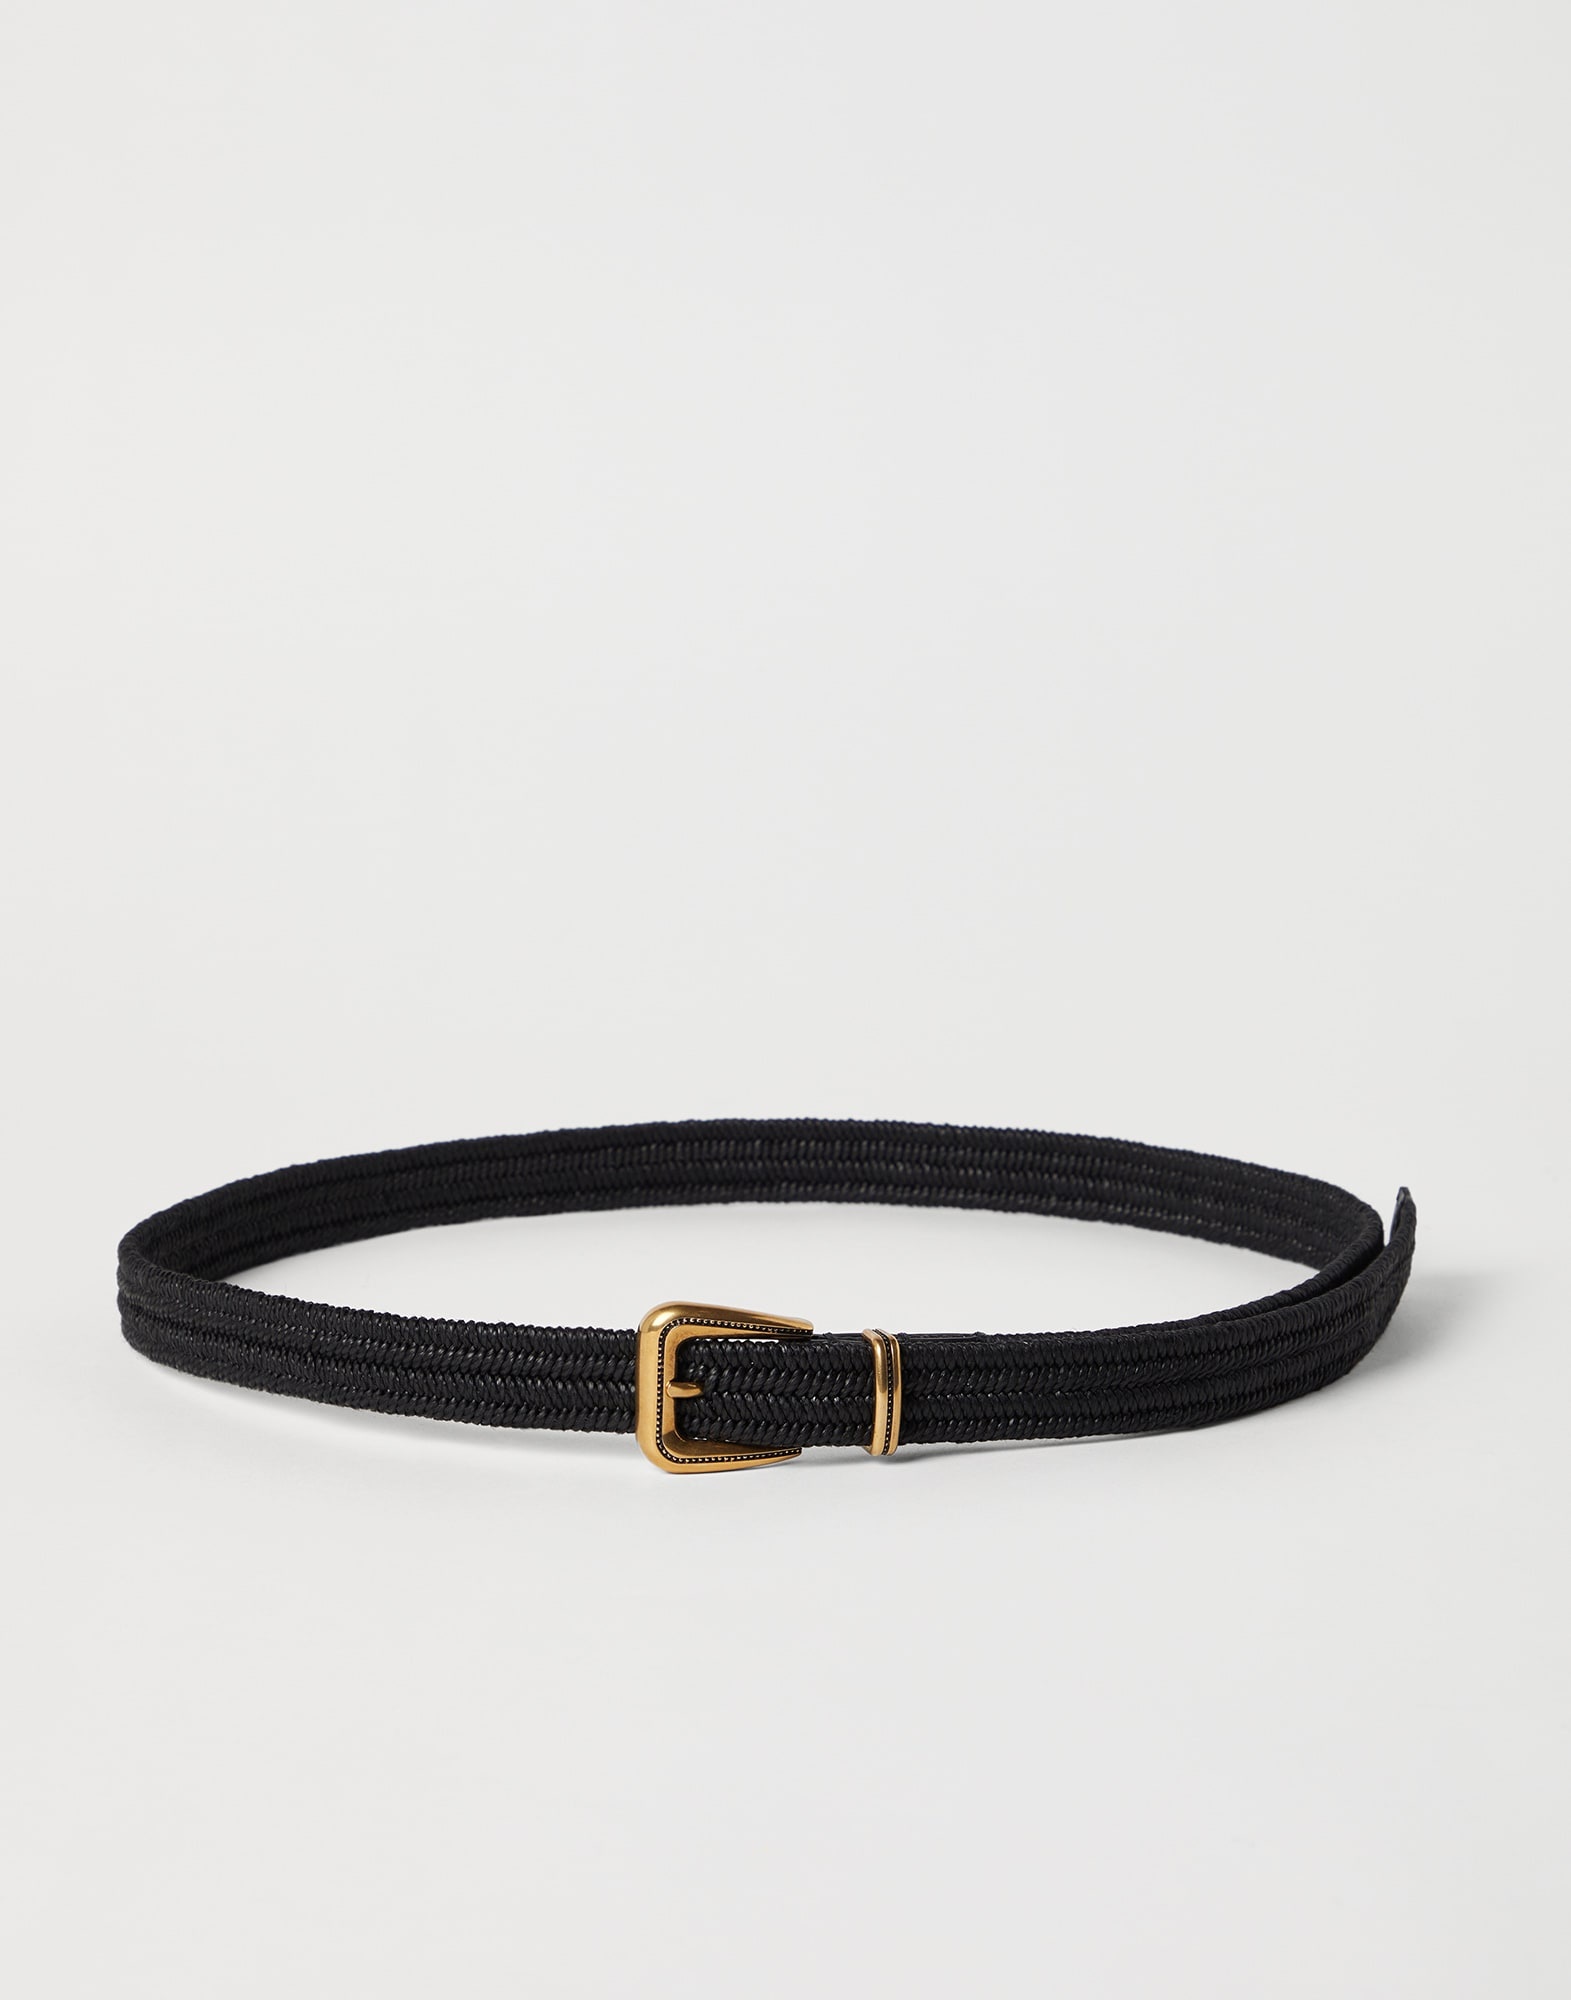 Rustic braided linen belt - 1